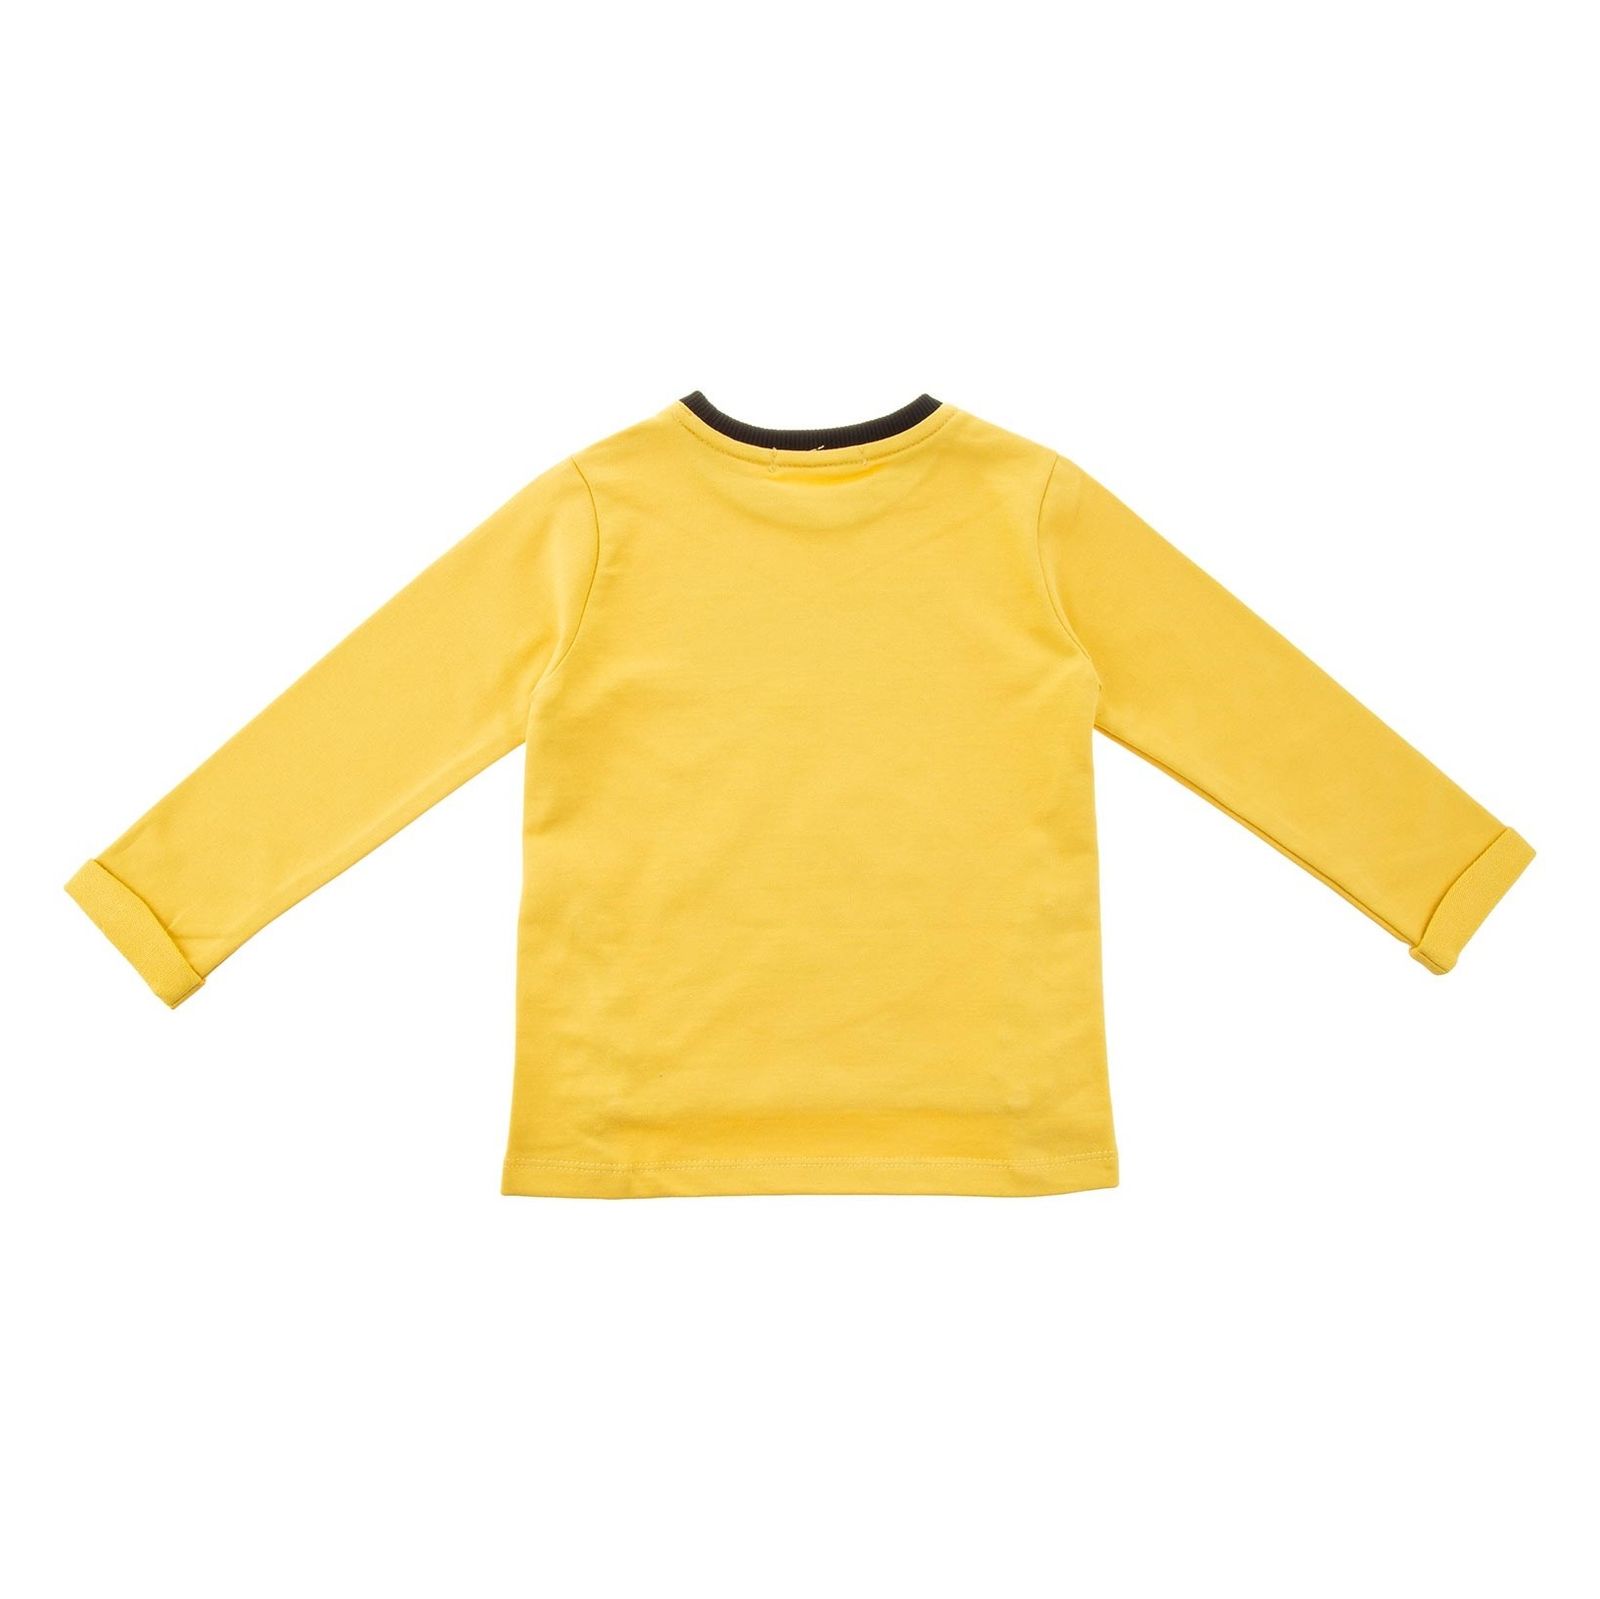 تی شرت نخی یقه گرد پسرانه - پیانو - زرد - 3